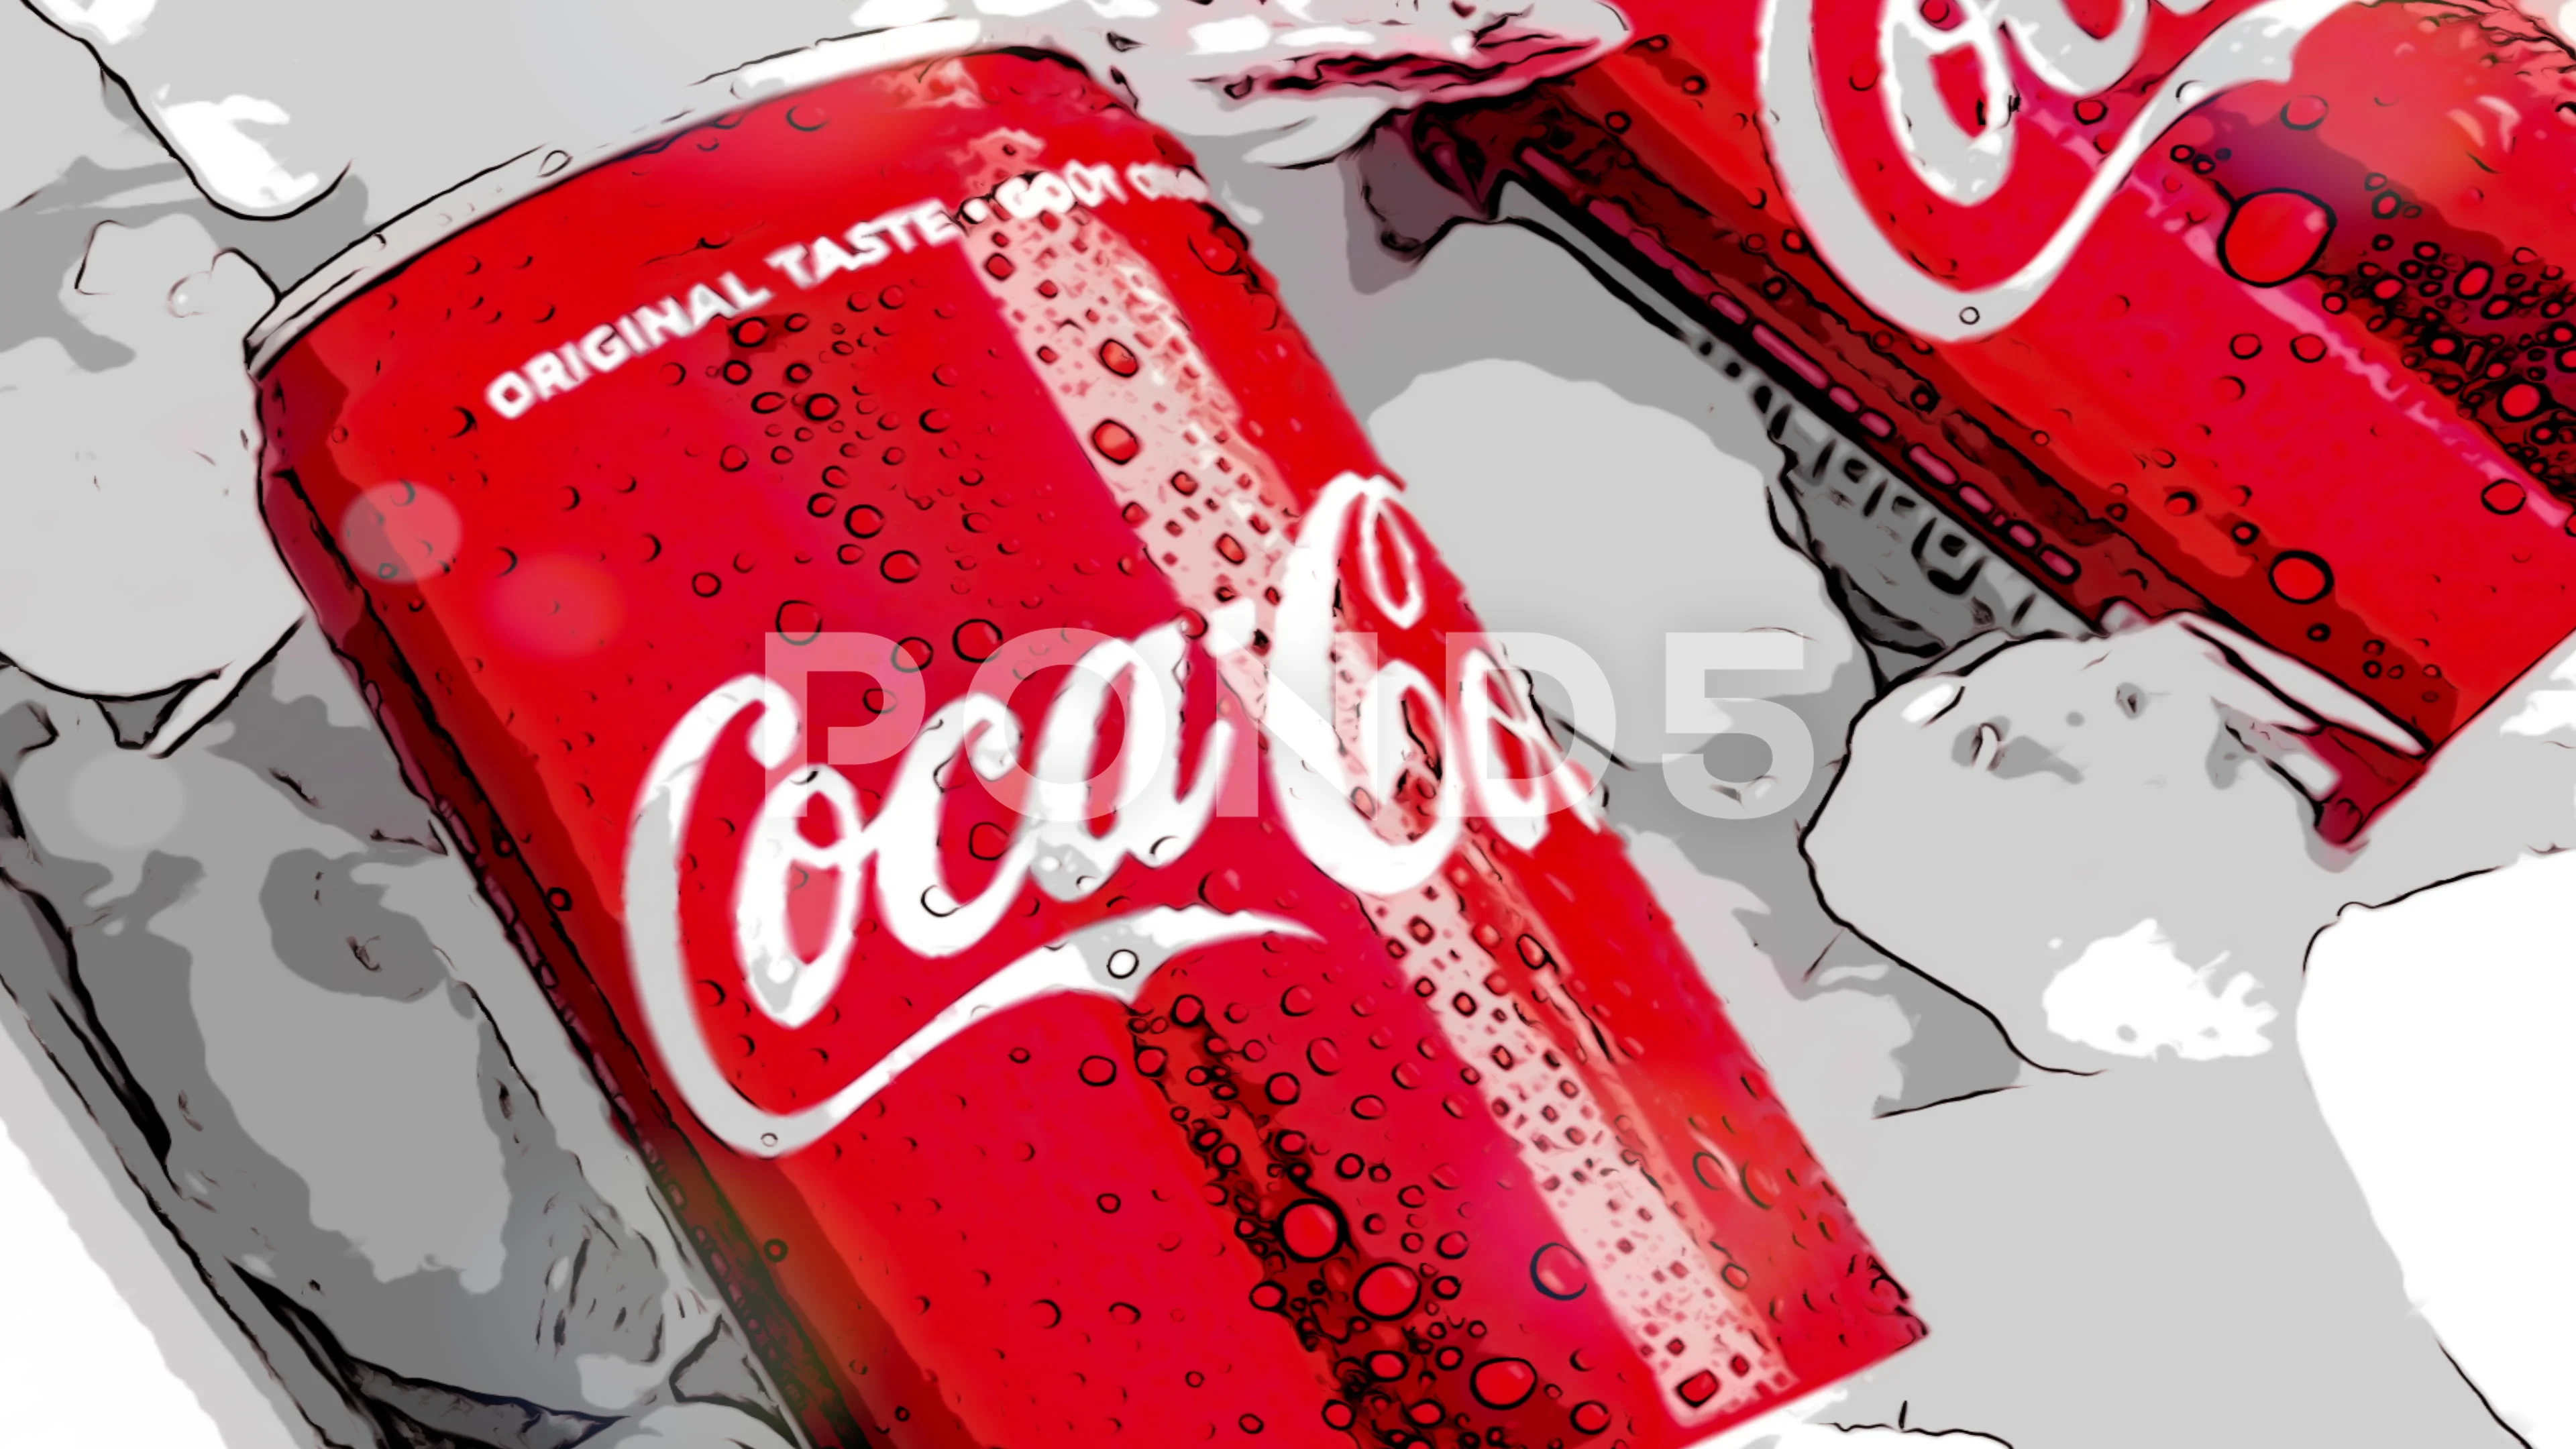 Delicious and Refreshing! Coke Can by Mariya Rovenko on Dribbble